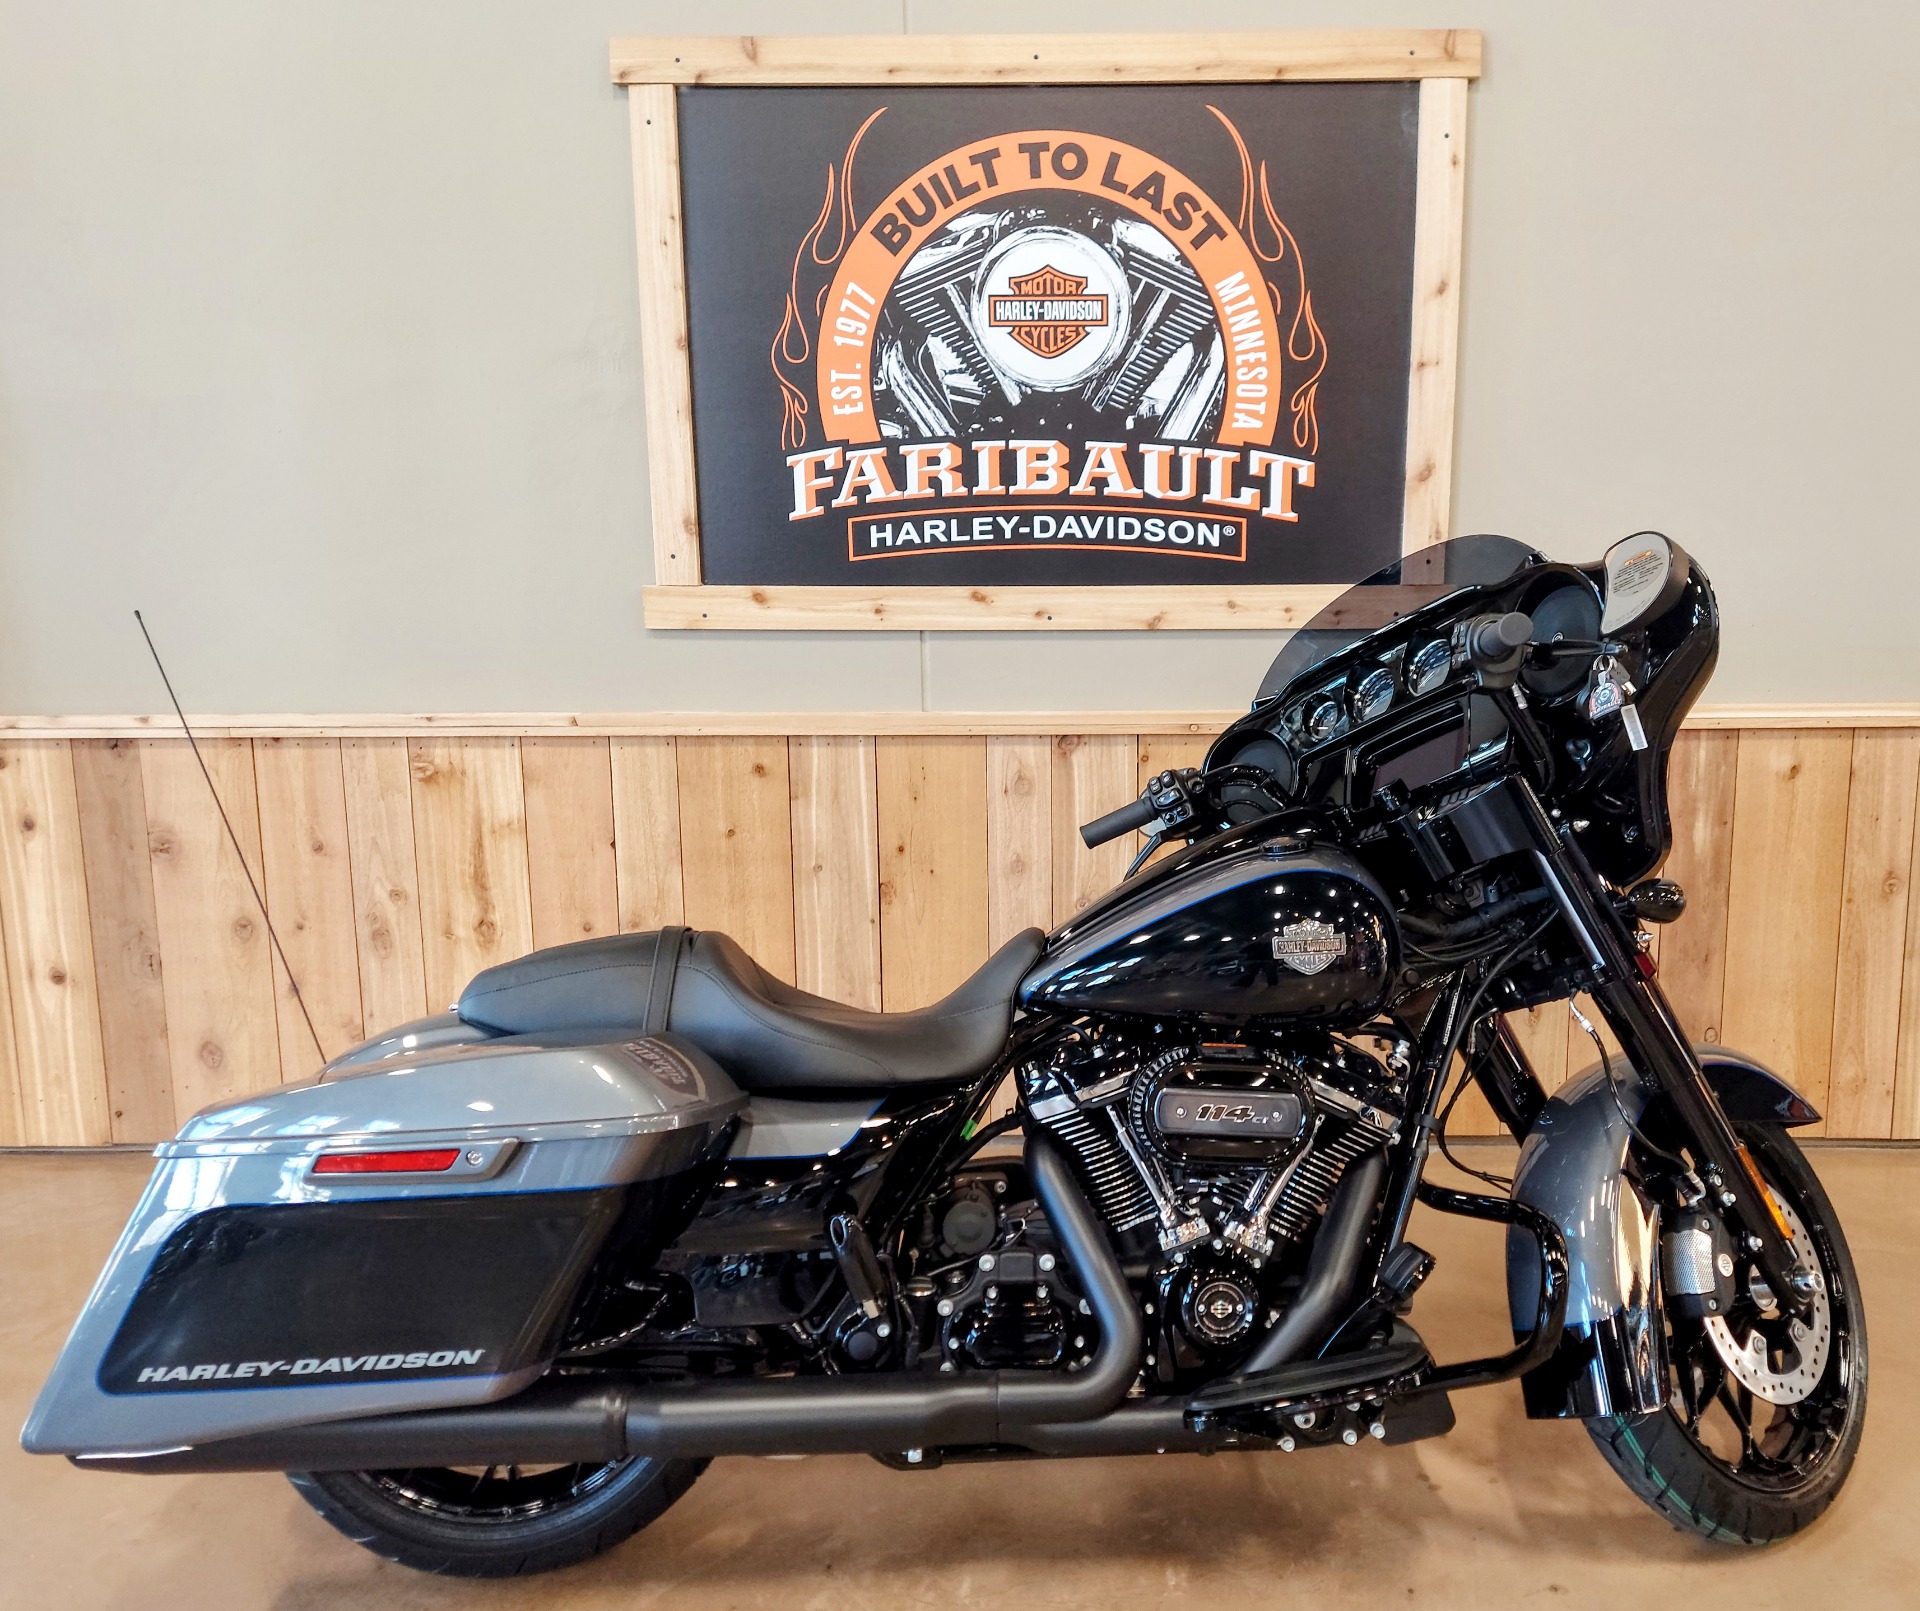 New 2021 Harley Davidson Street Glide Special Motorcycles In Faribault Mn To668236 Gauntlet Gray Metallic Vivid Black Black Pearl Option